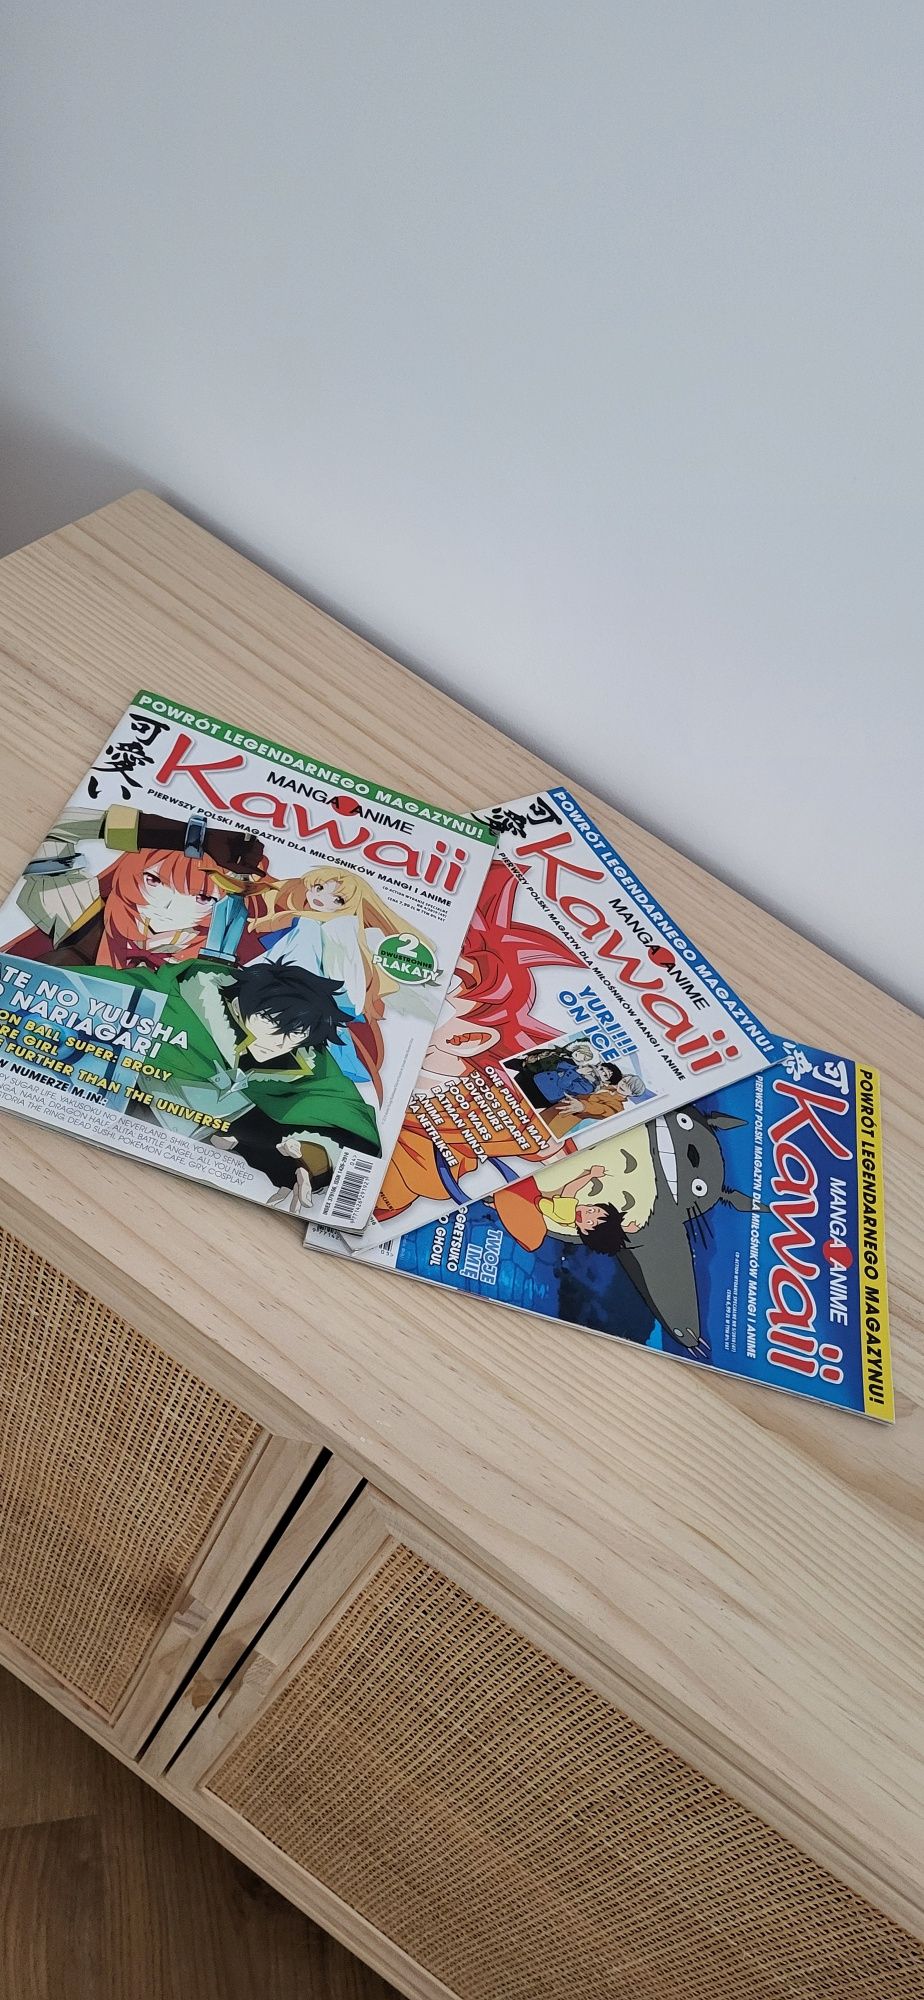 Czasopisma anime Kawaii oraz Otaku